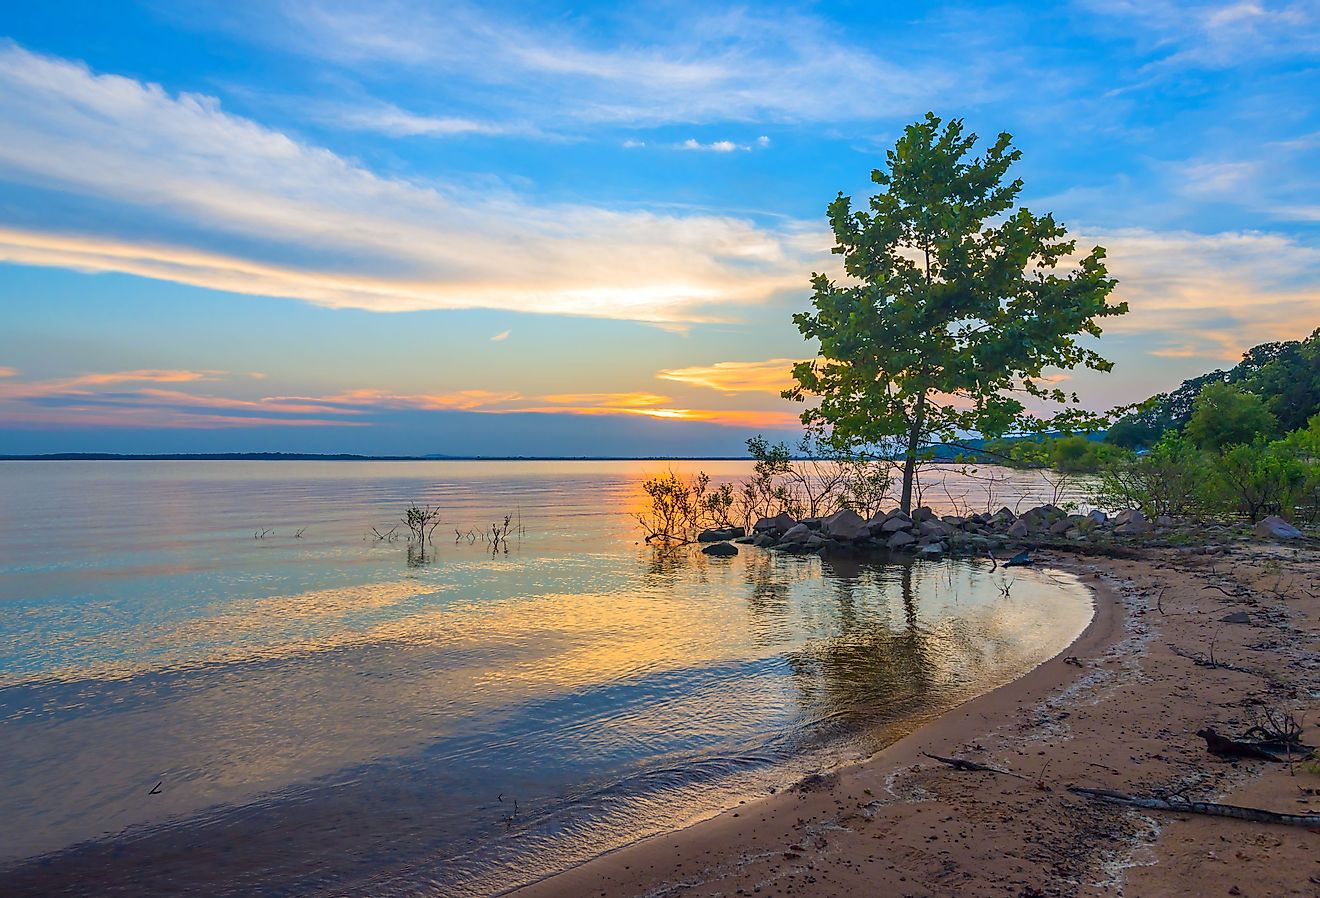 Beautiful Lake Eufaula, found in eastern Oklahoma. Image credit JohnDSmith via Shutterstock.